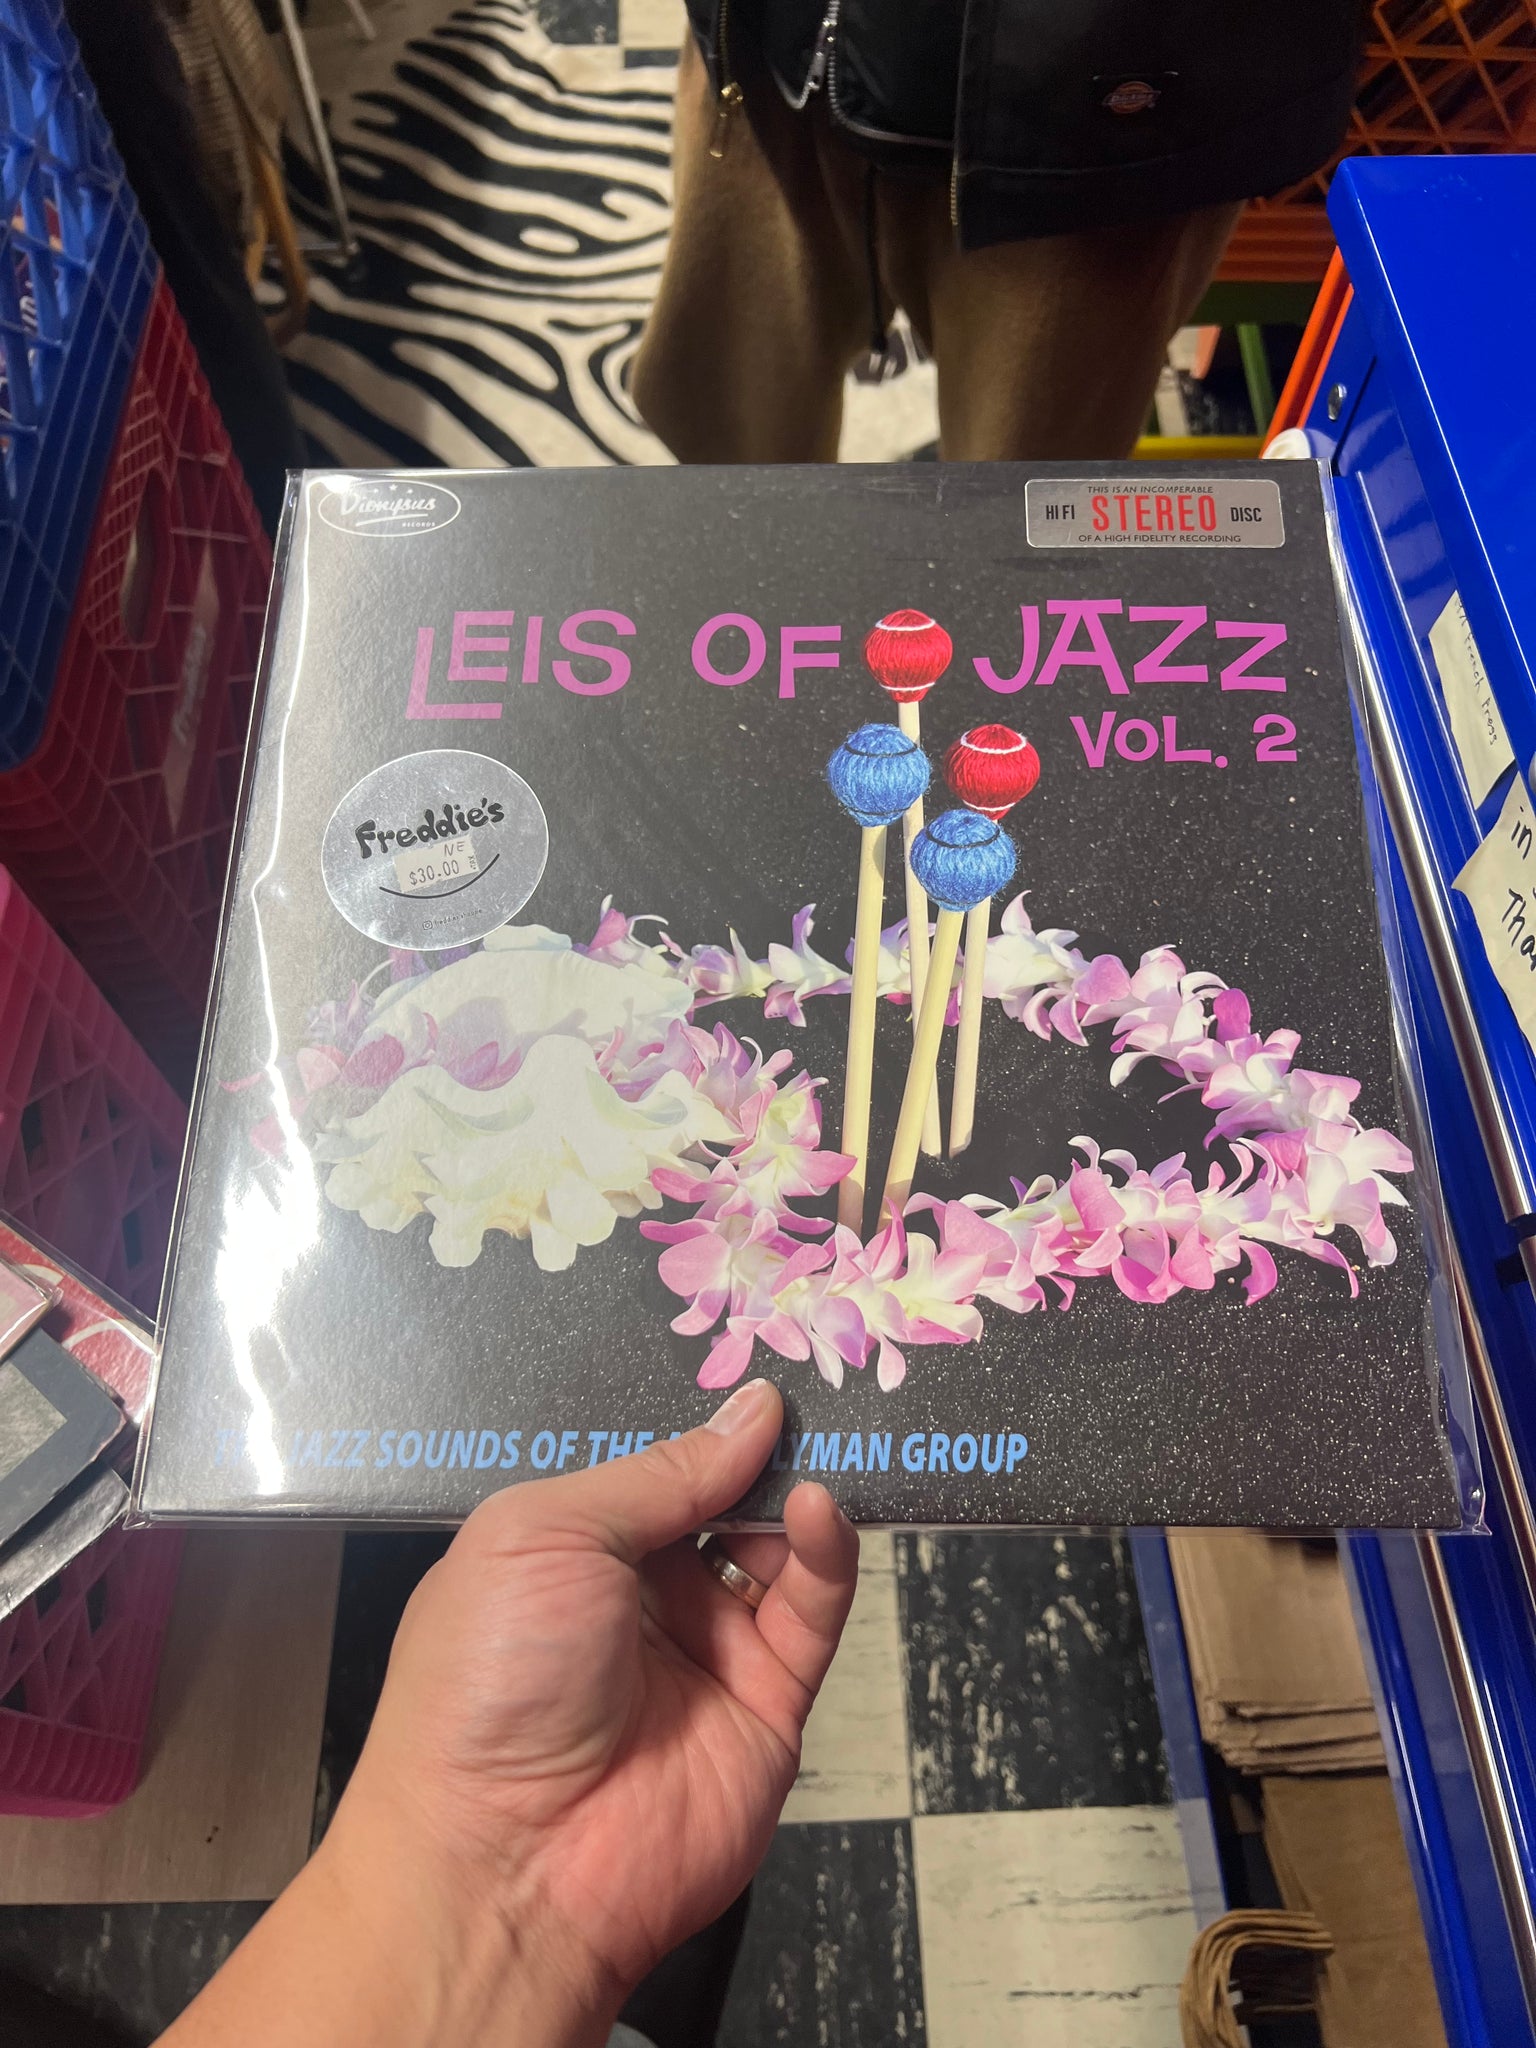 Leis of jazz vol 2